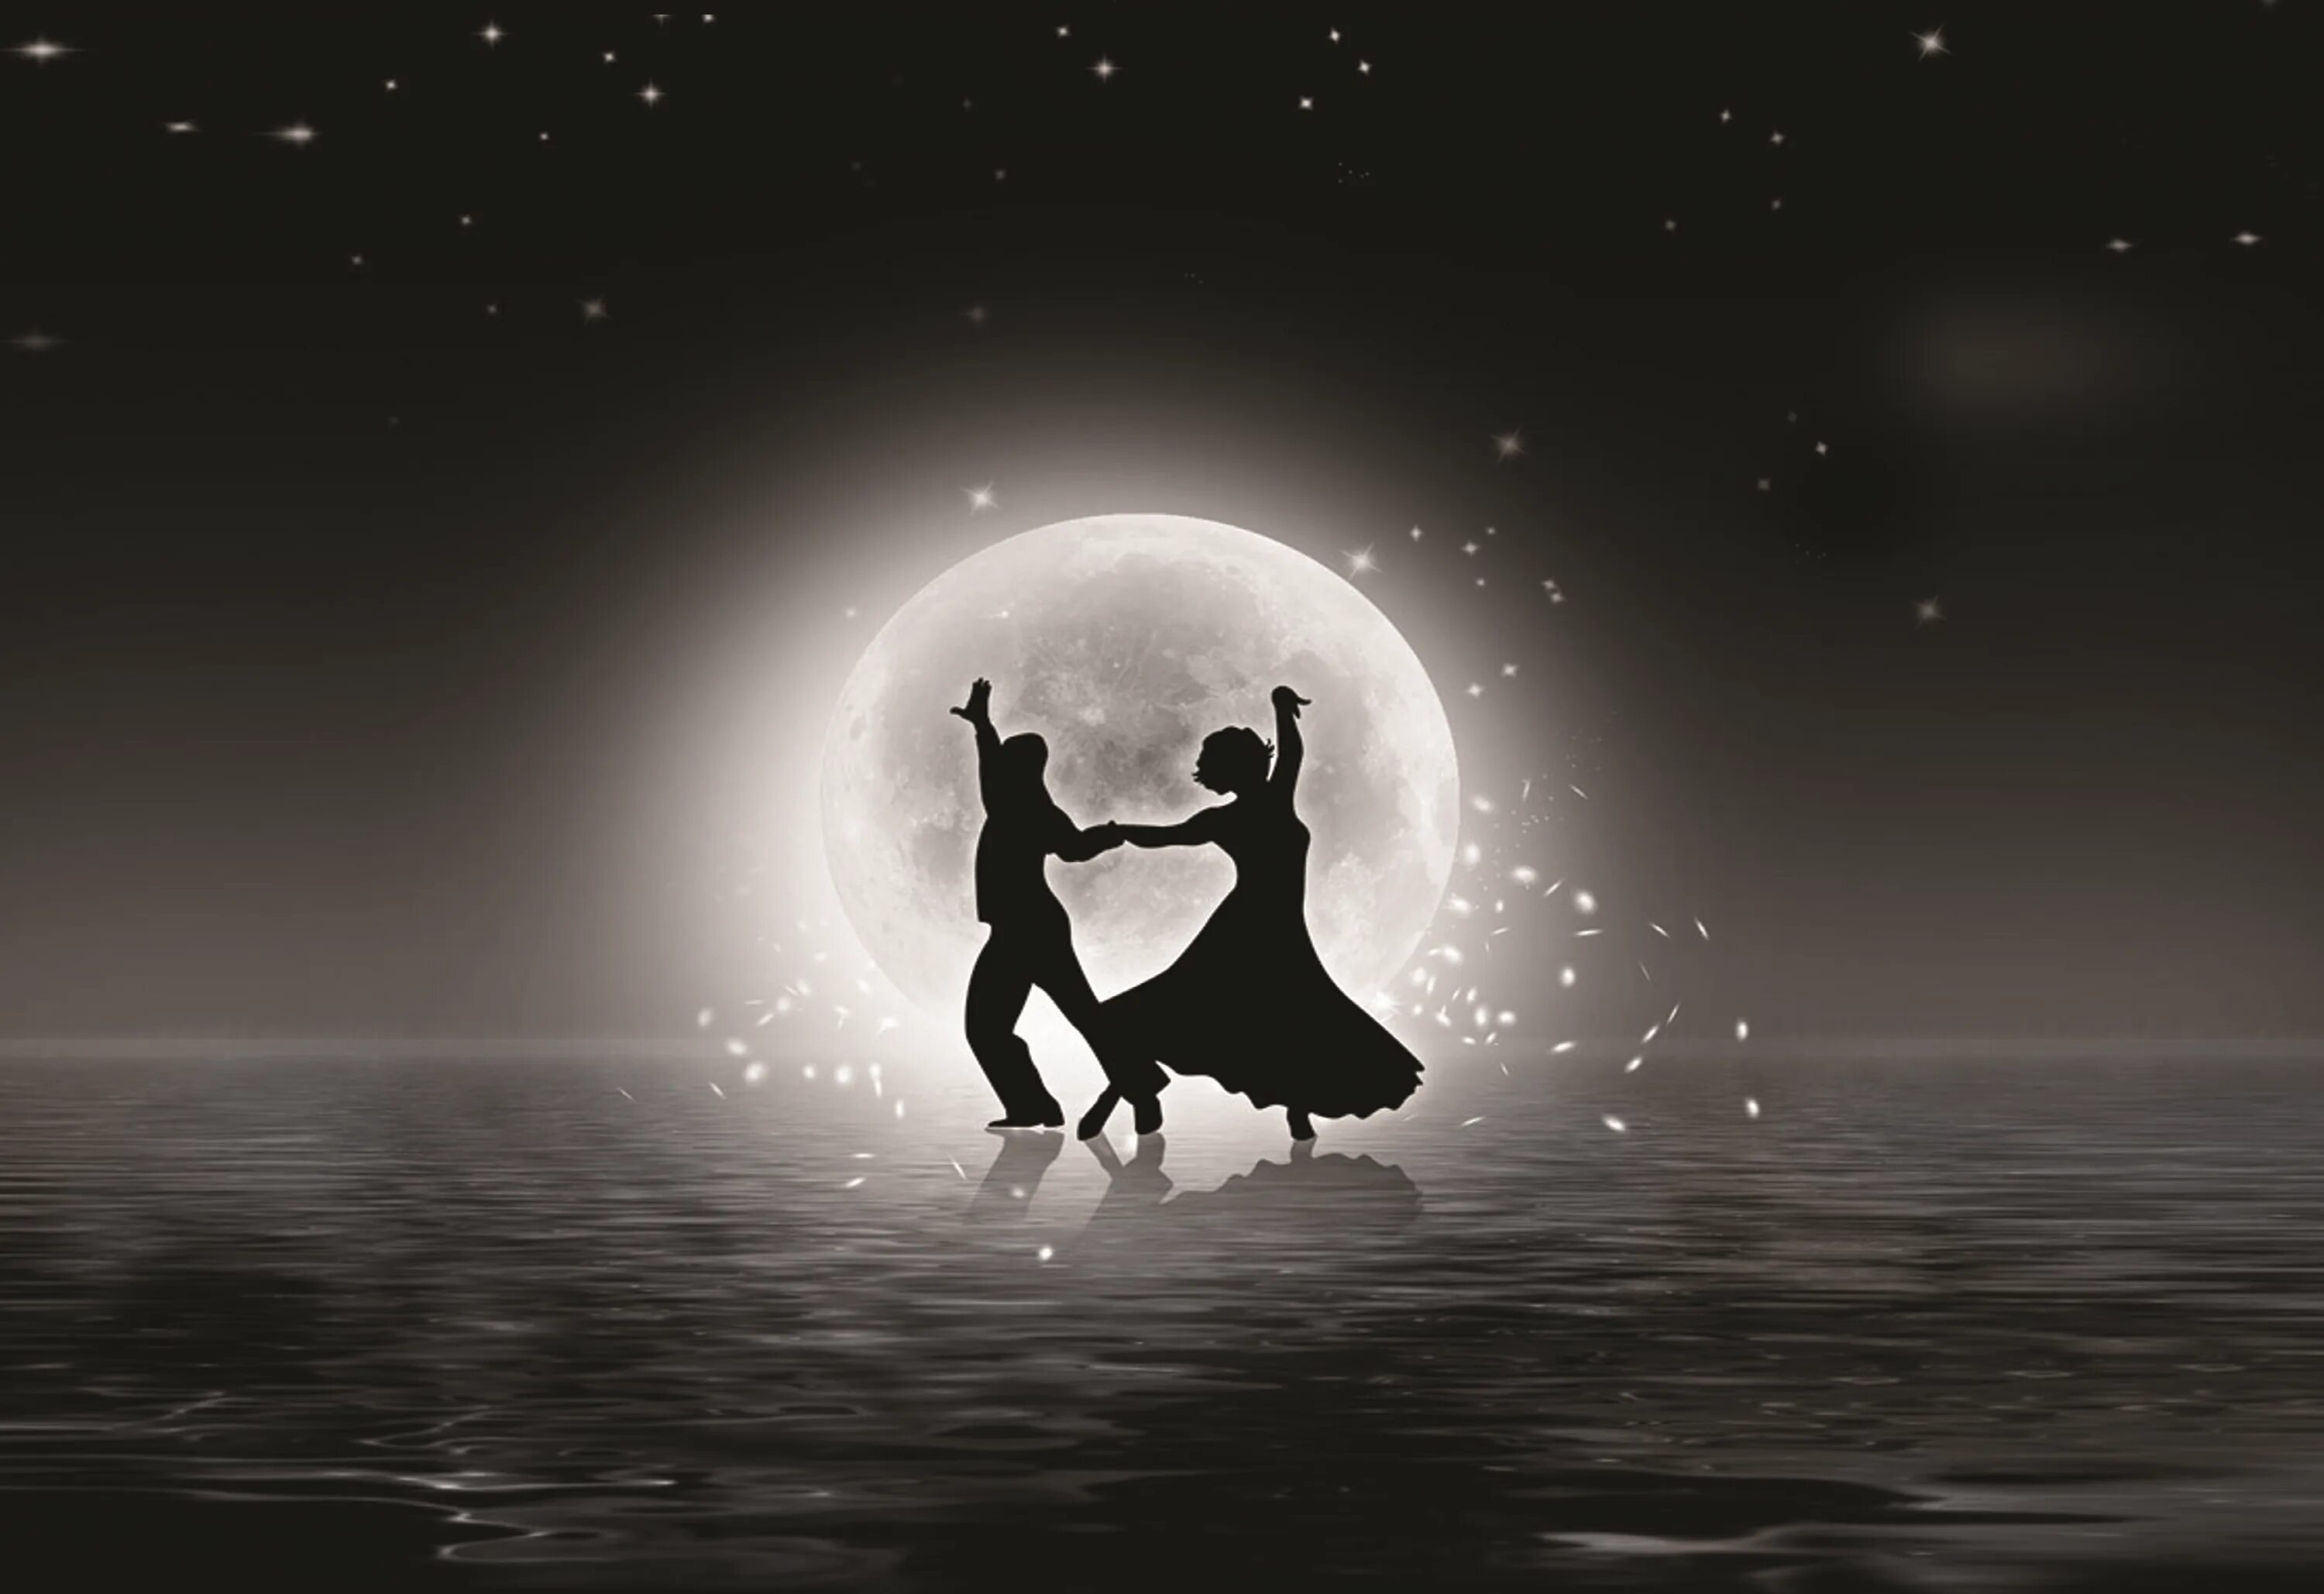 Мы танцуем под луной текст. Клайдерман лунное танго. Танцы под луной. Танец под луной картина.